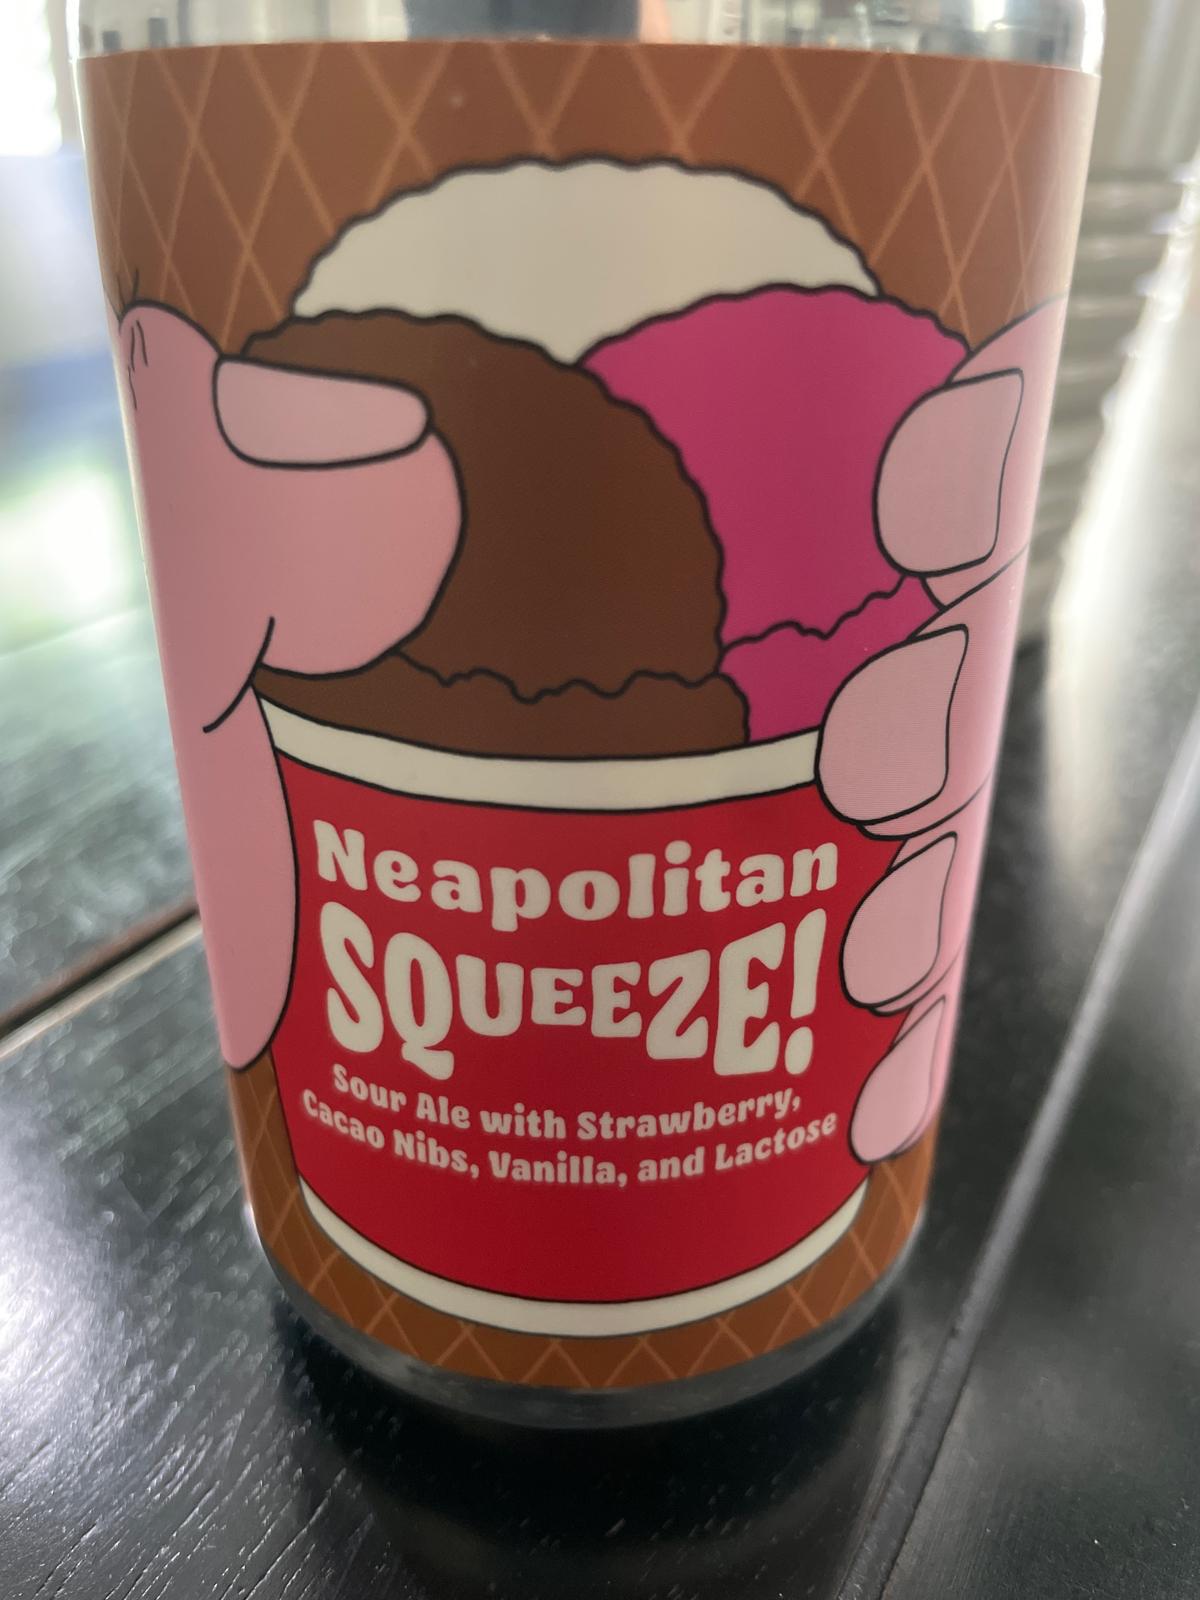 Neapolitan Squeeze!